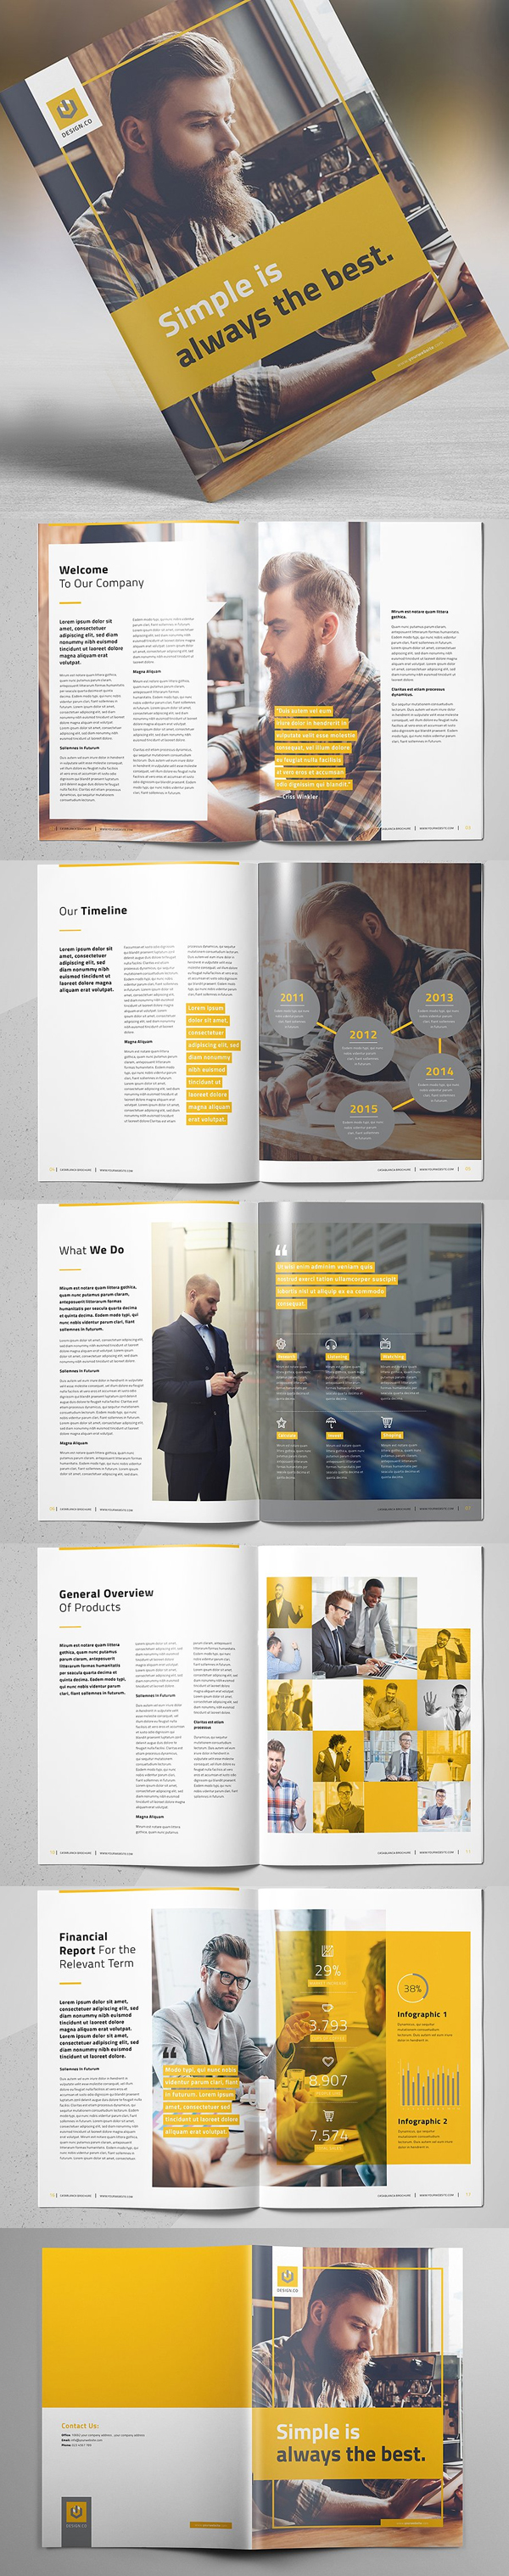 100 Professional Corporate Brochure Templates - 24